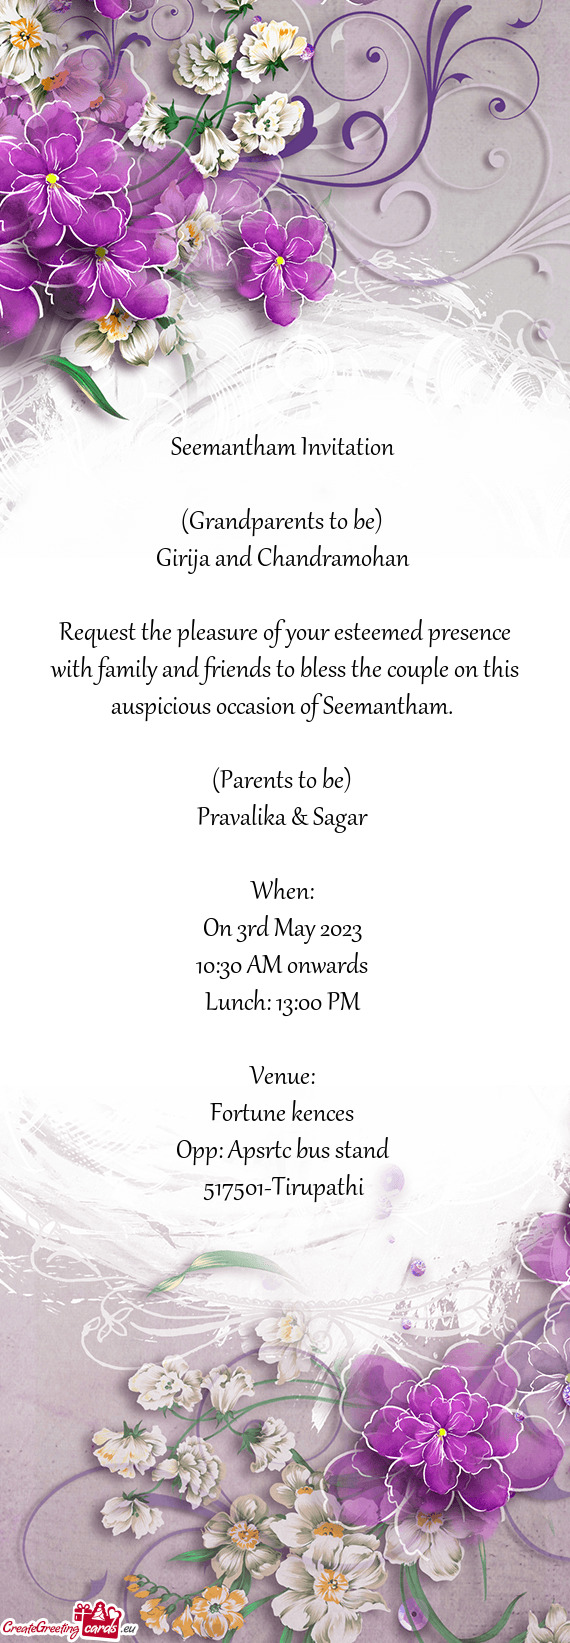 Girija and Chandramohan